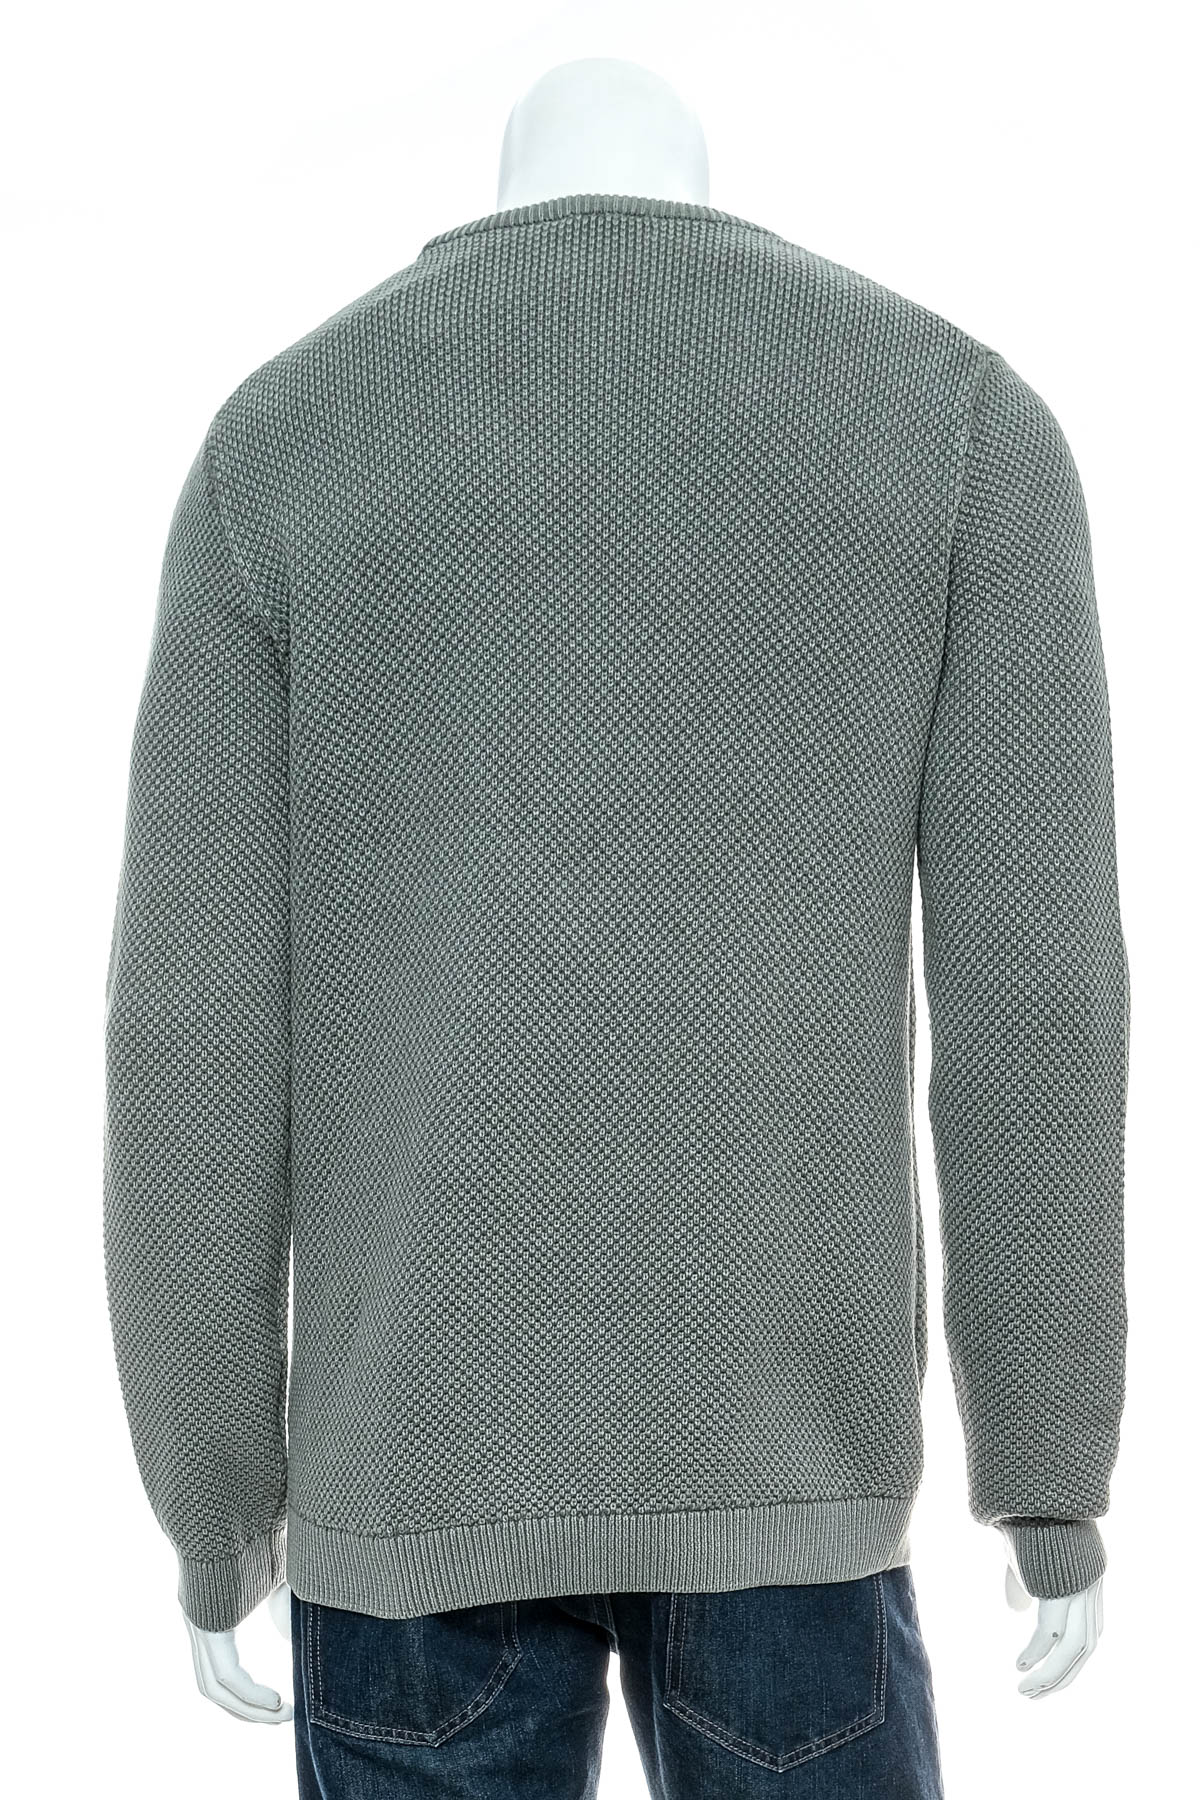 Men's sweater - Target - 1